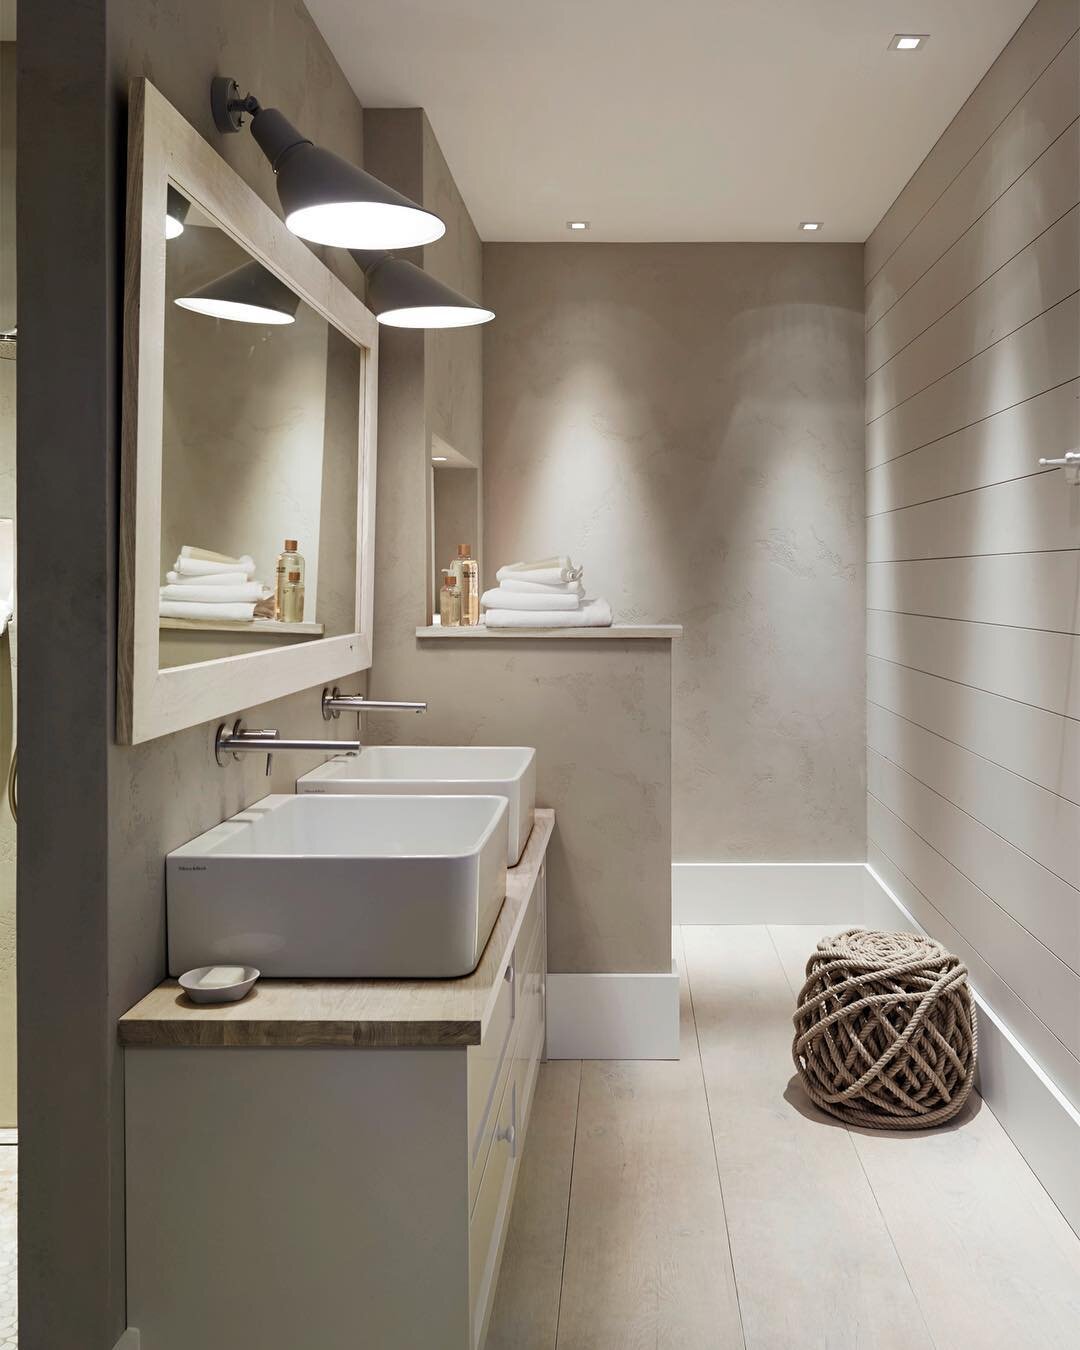 Designed by Anne Steiskal |💧 Bathroom |📍 Hamburg | 📸 Stefan Thurmann | ✉️ PM for interior enquiries
.
.
.
.
.
#interiordesign #interior #design #homedecor #homedesign #interiorandhome #creativity #neutralcolours #pure #details #lifestyle #makemome